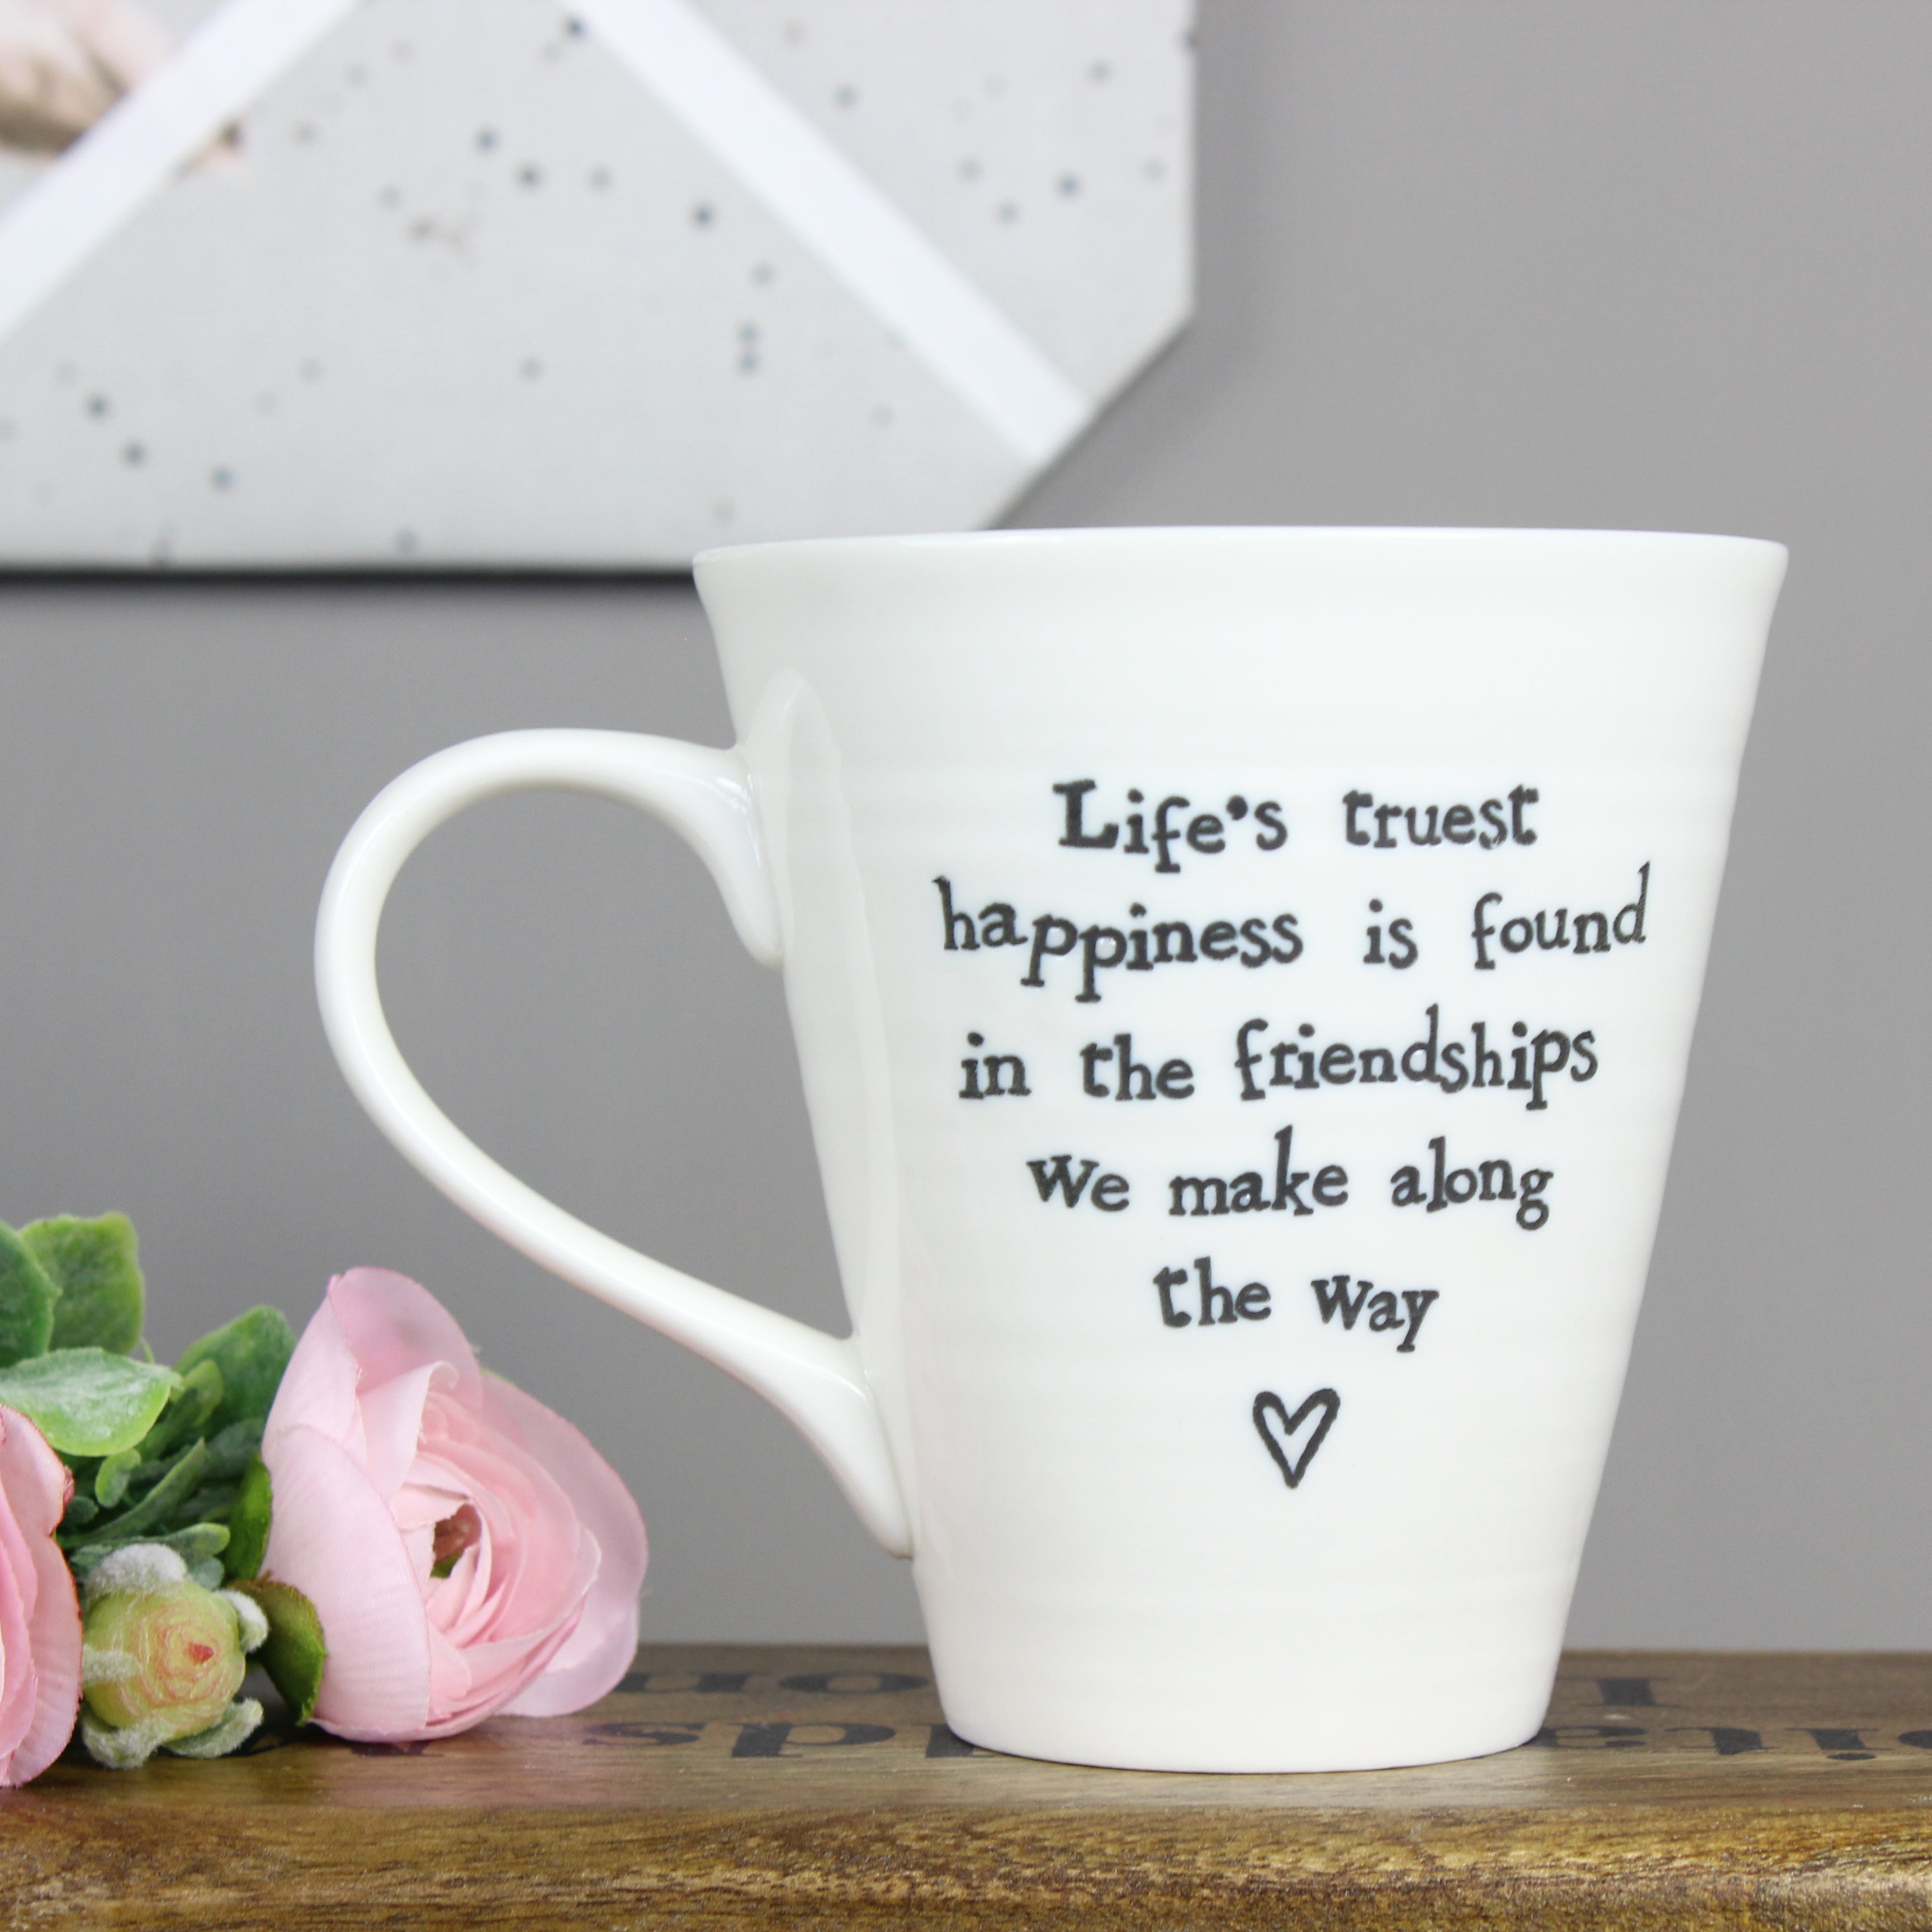 East of India Porcelain Mug Life's Truest Happiness